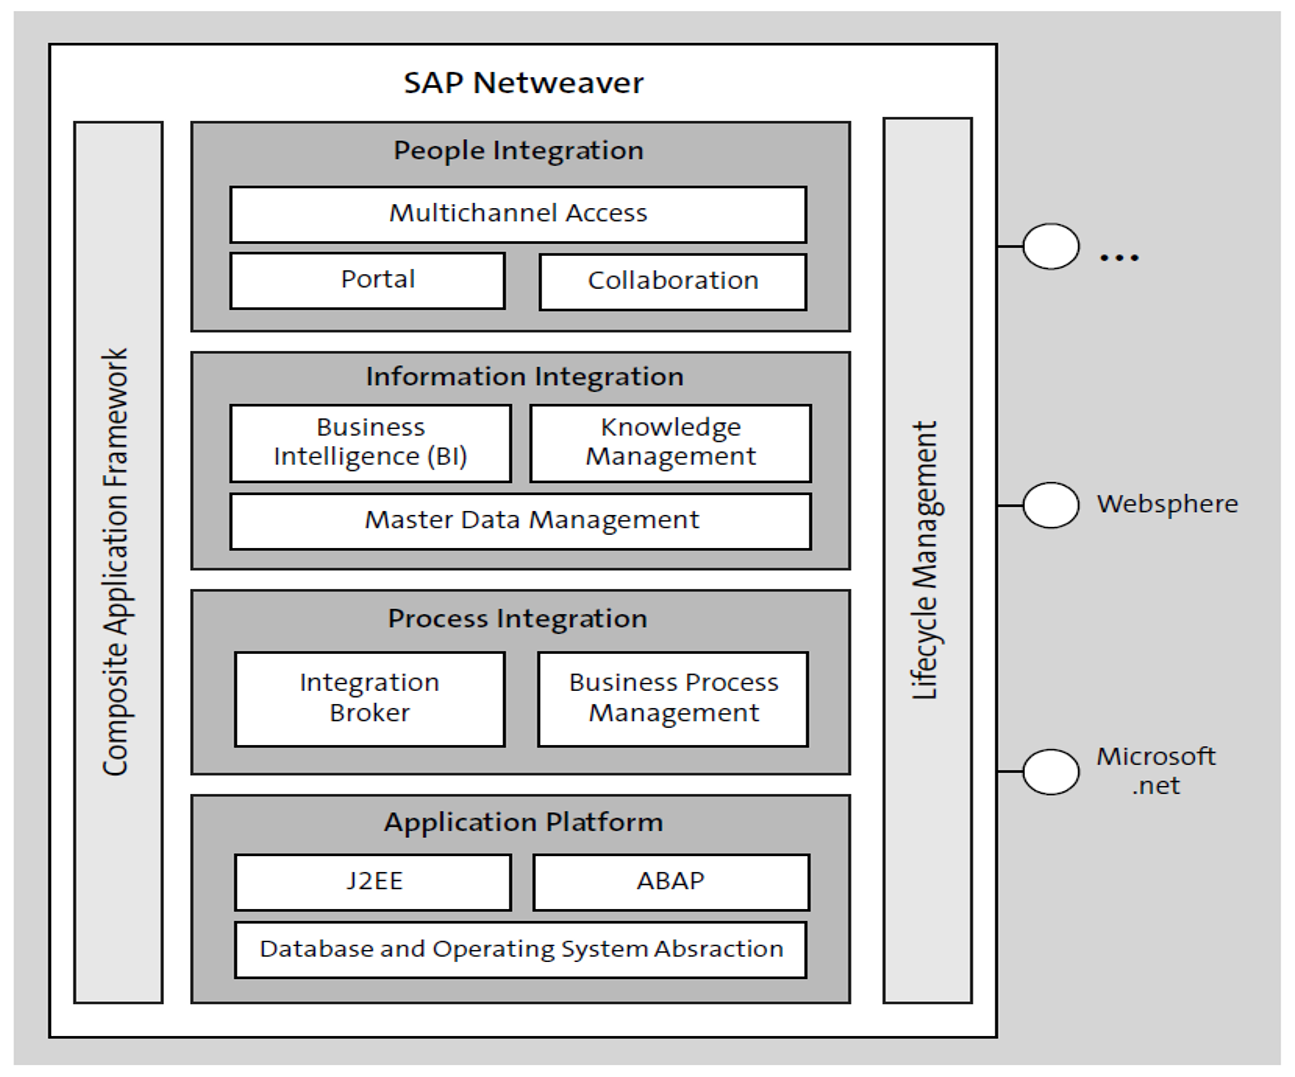 SAP NetWeaver Components